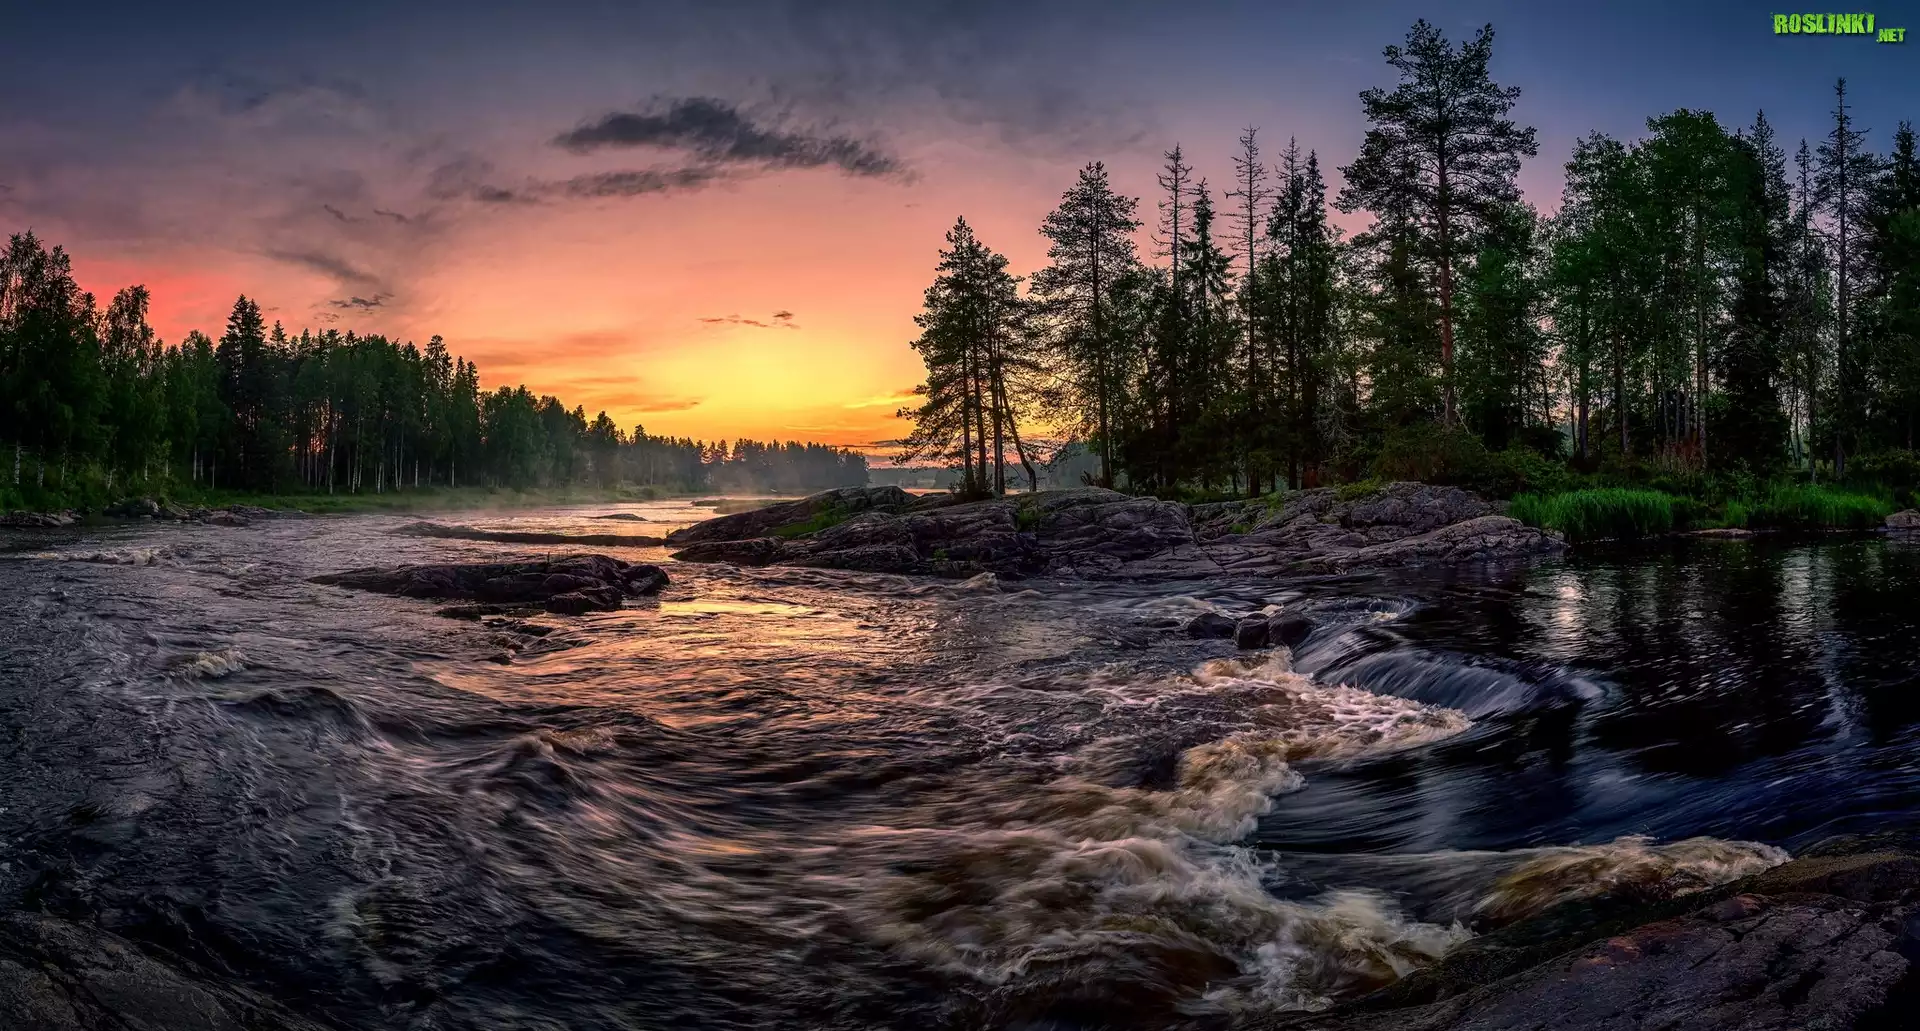 Rzeka Kiiminkijoki, Teren Koiteli, Kiiminki, Finlandia, Wschód słońca, Las, Drzewa, Kamienie